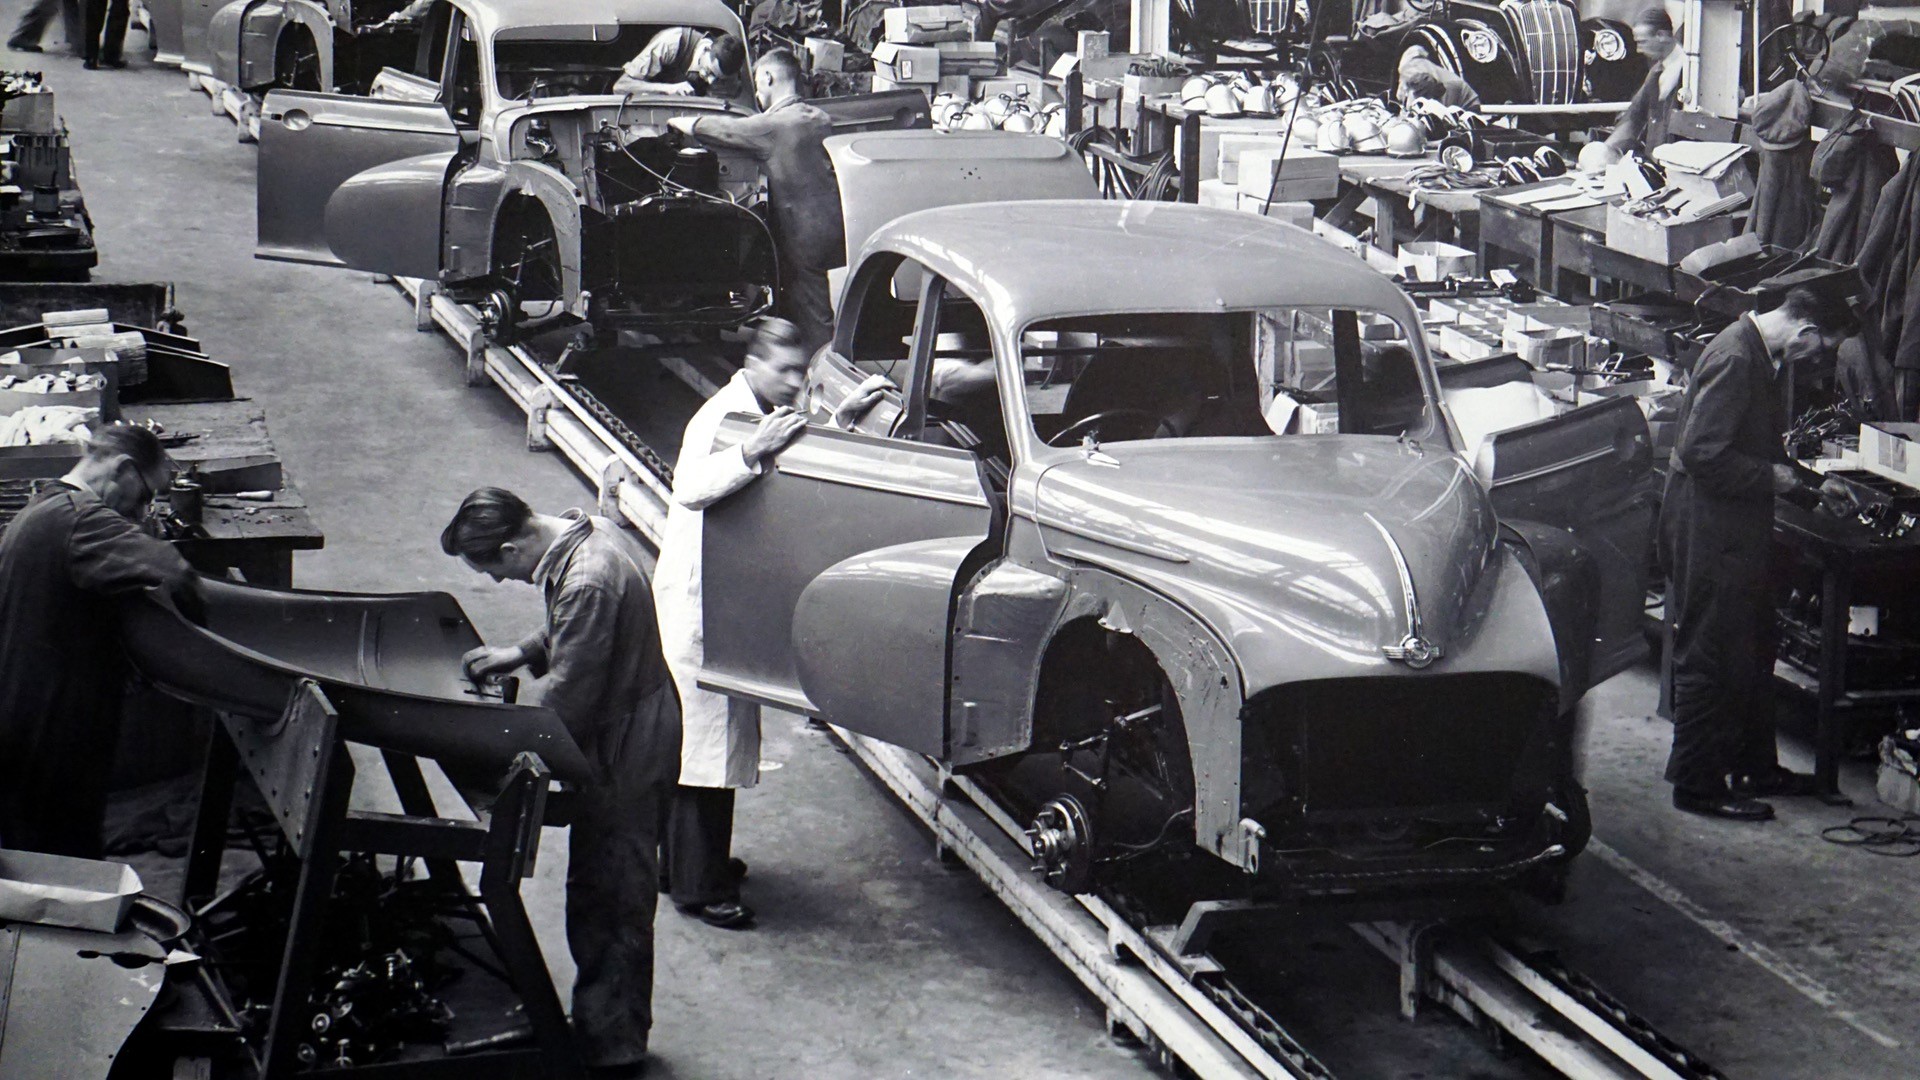 People 1920x1080 vehicle car vintage men factories workers old photos monochrome industrial